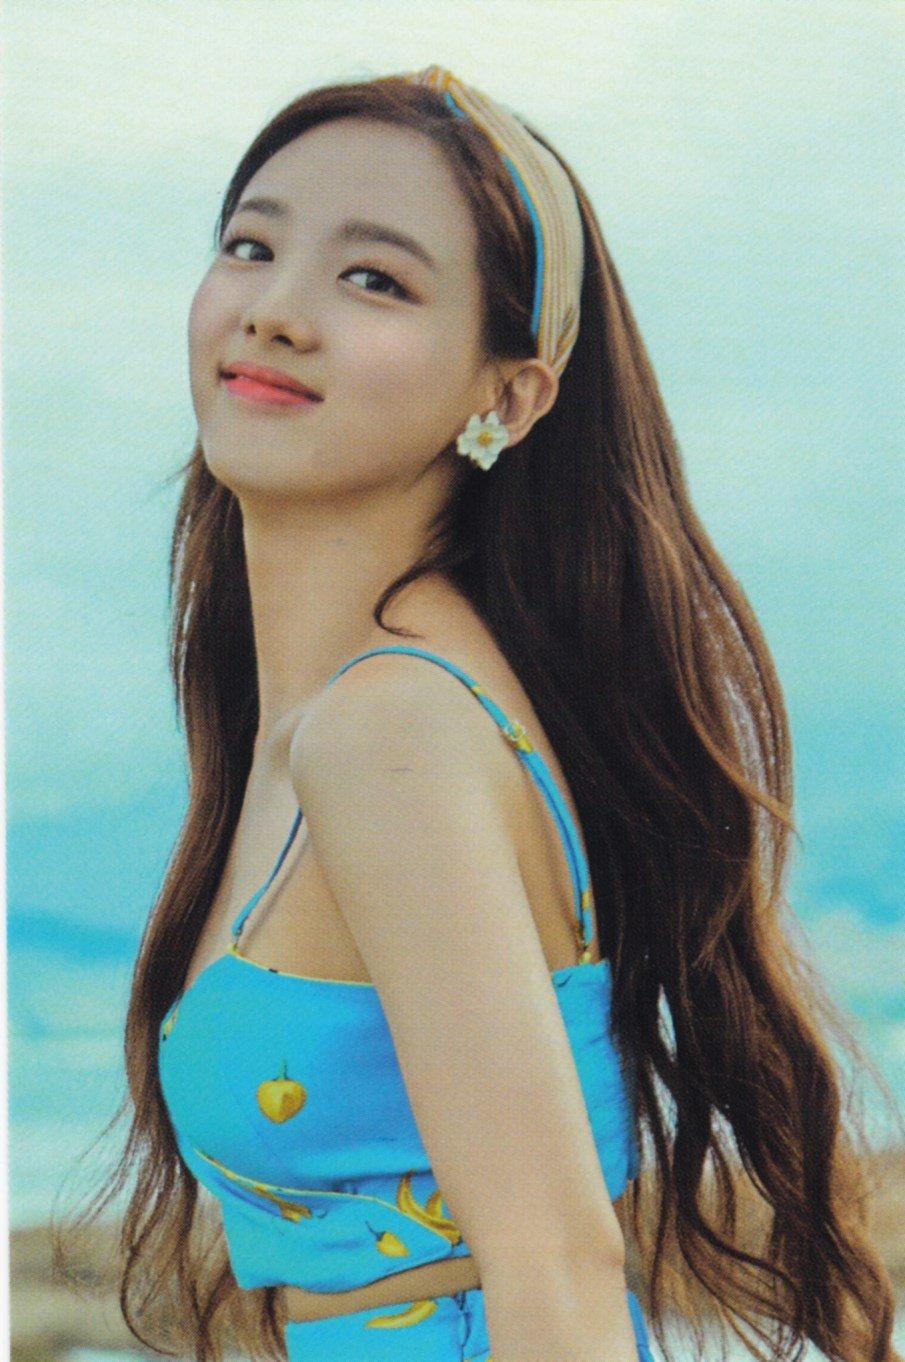 Twice Na Yeon Wallpapers - Top Free Twice Na Yeon Backgrounds ...